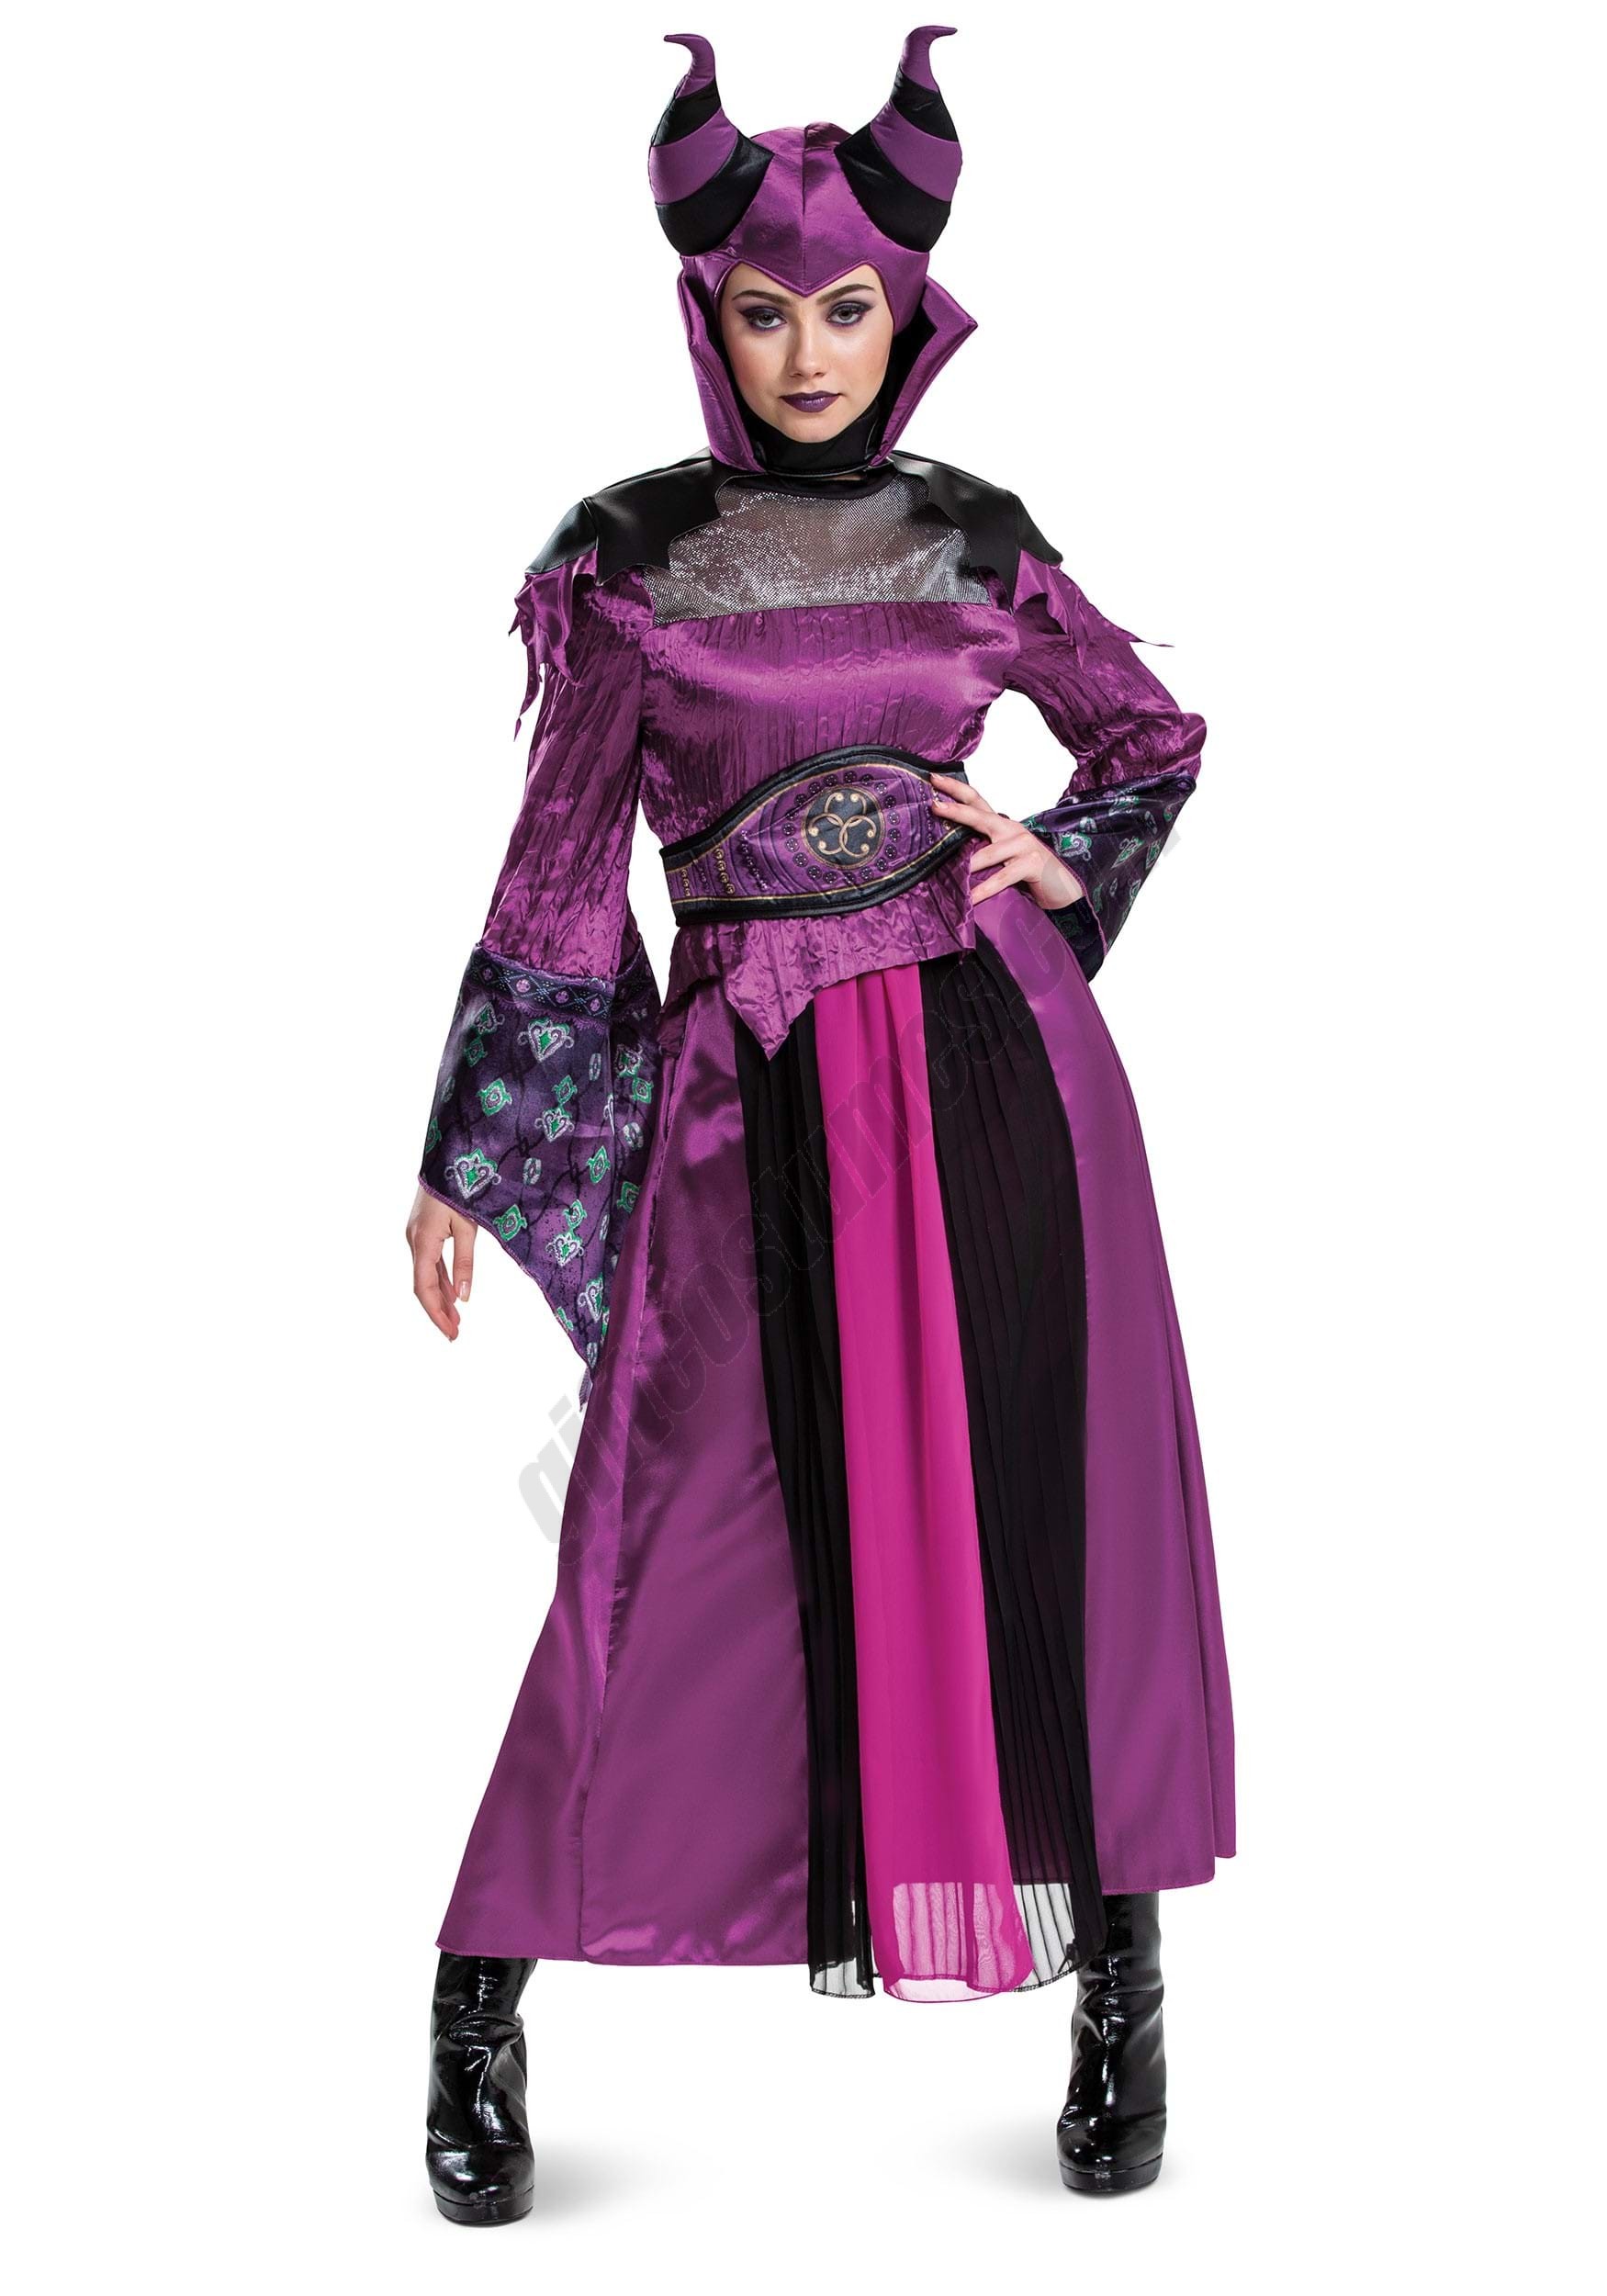 Descendants Womens Maleficent Costume Promotions - Descendants Womens Maleficent Costume Promotions